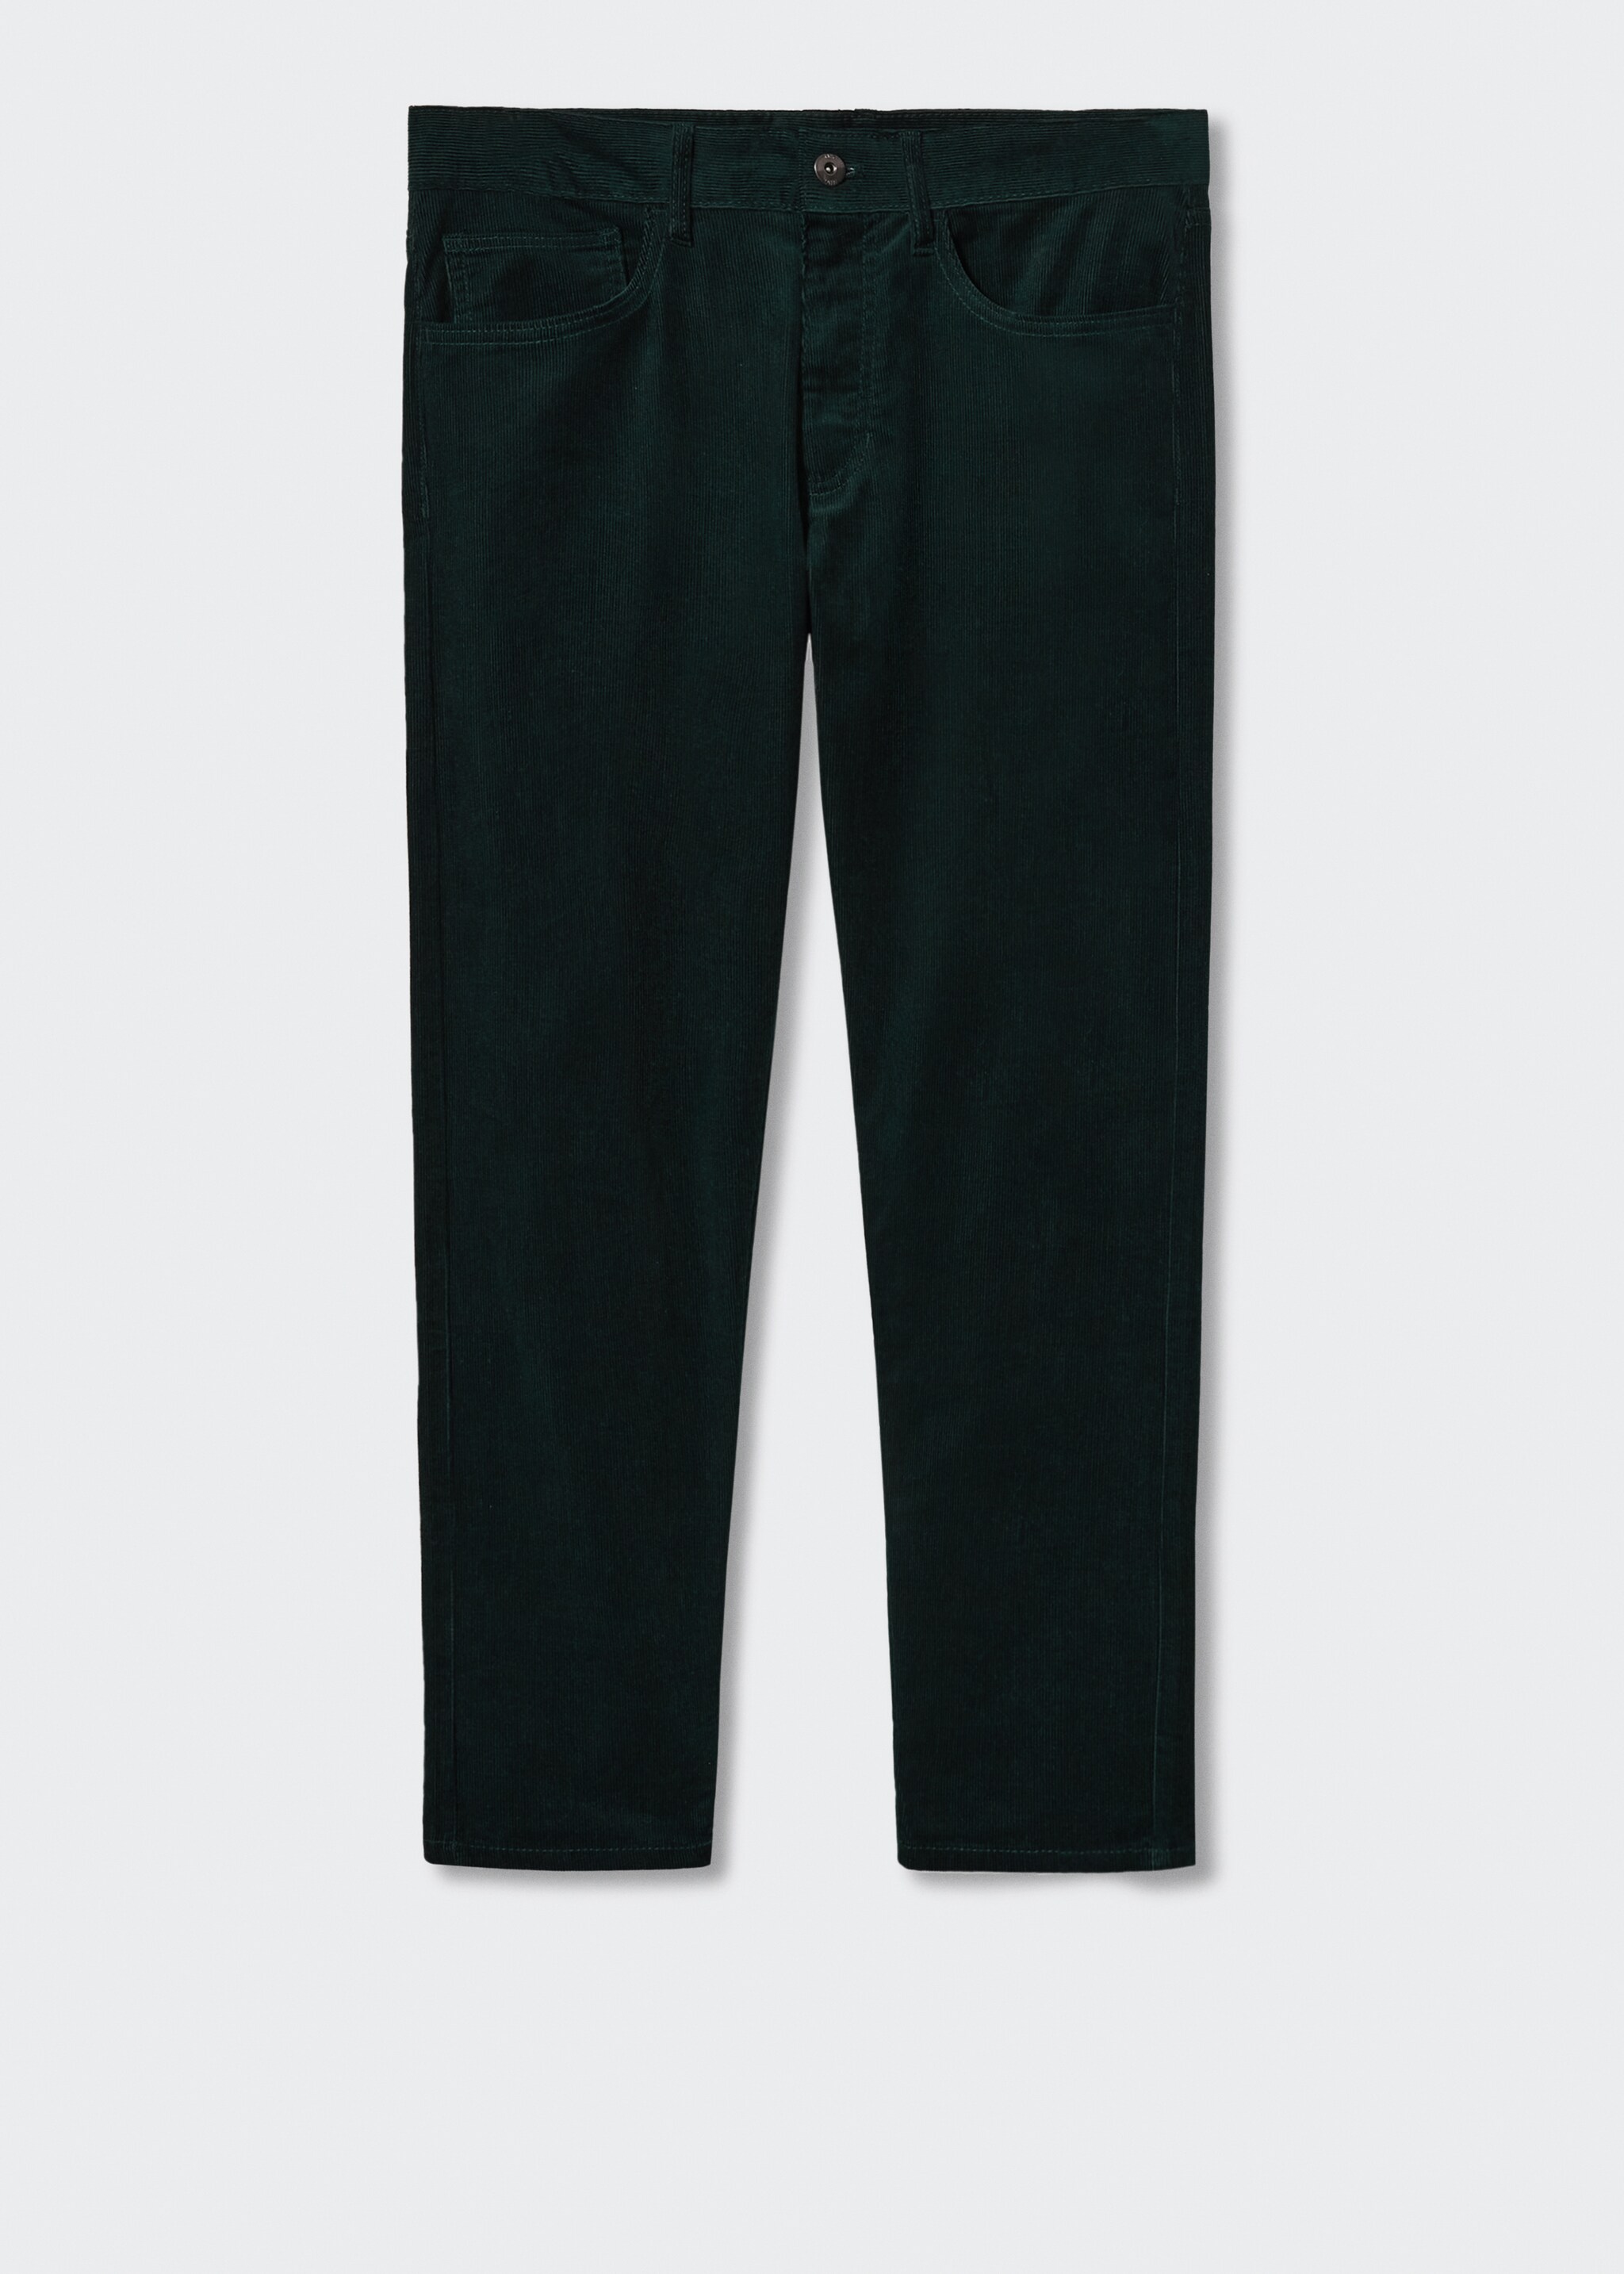 Pantalón tapered fit pana - Artículo sin modelo